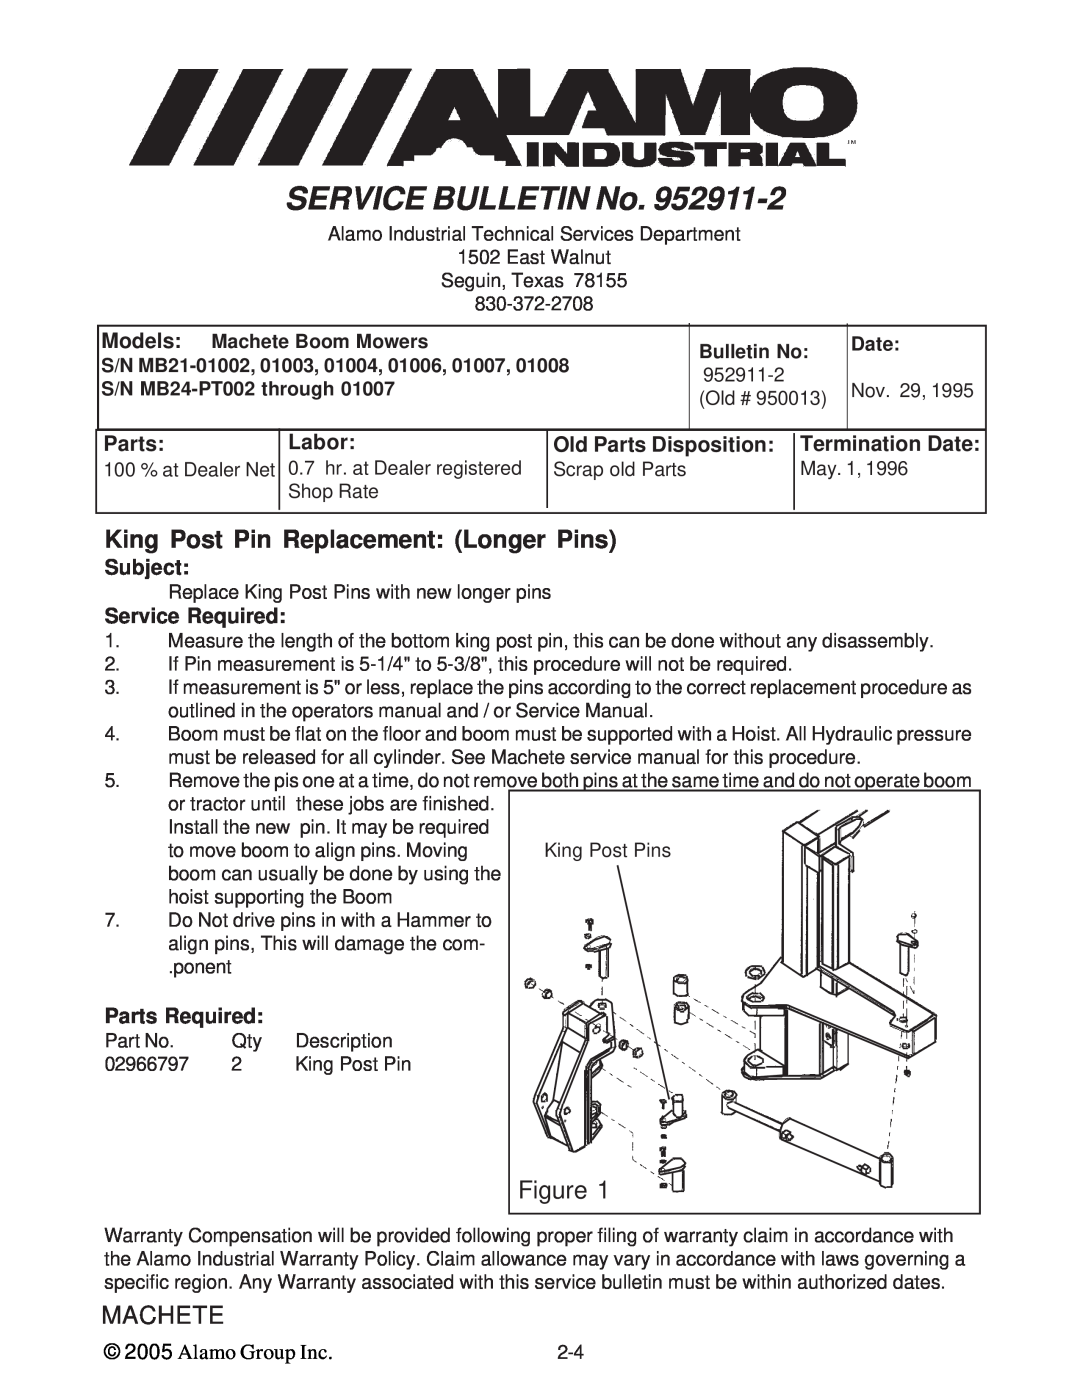 Alamo T 7740 King Post Pin Replacement: Longer Pins, 952911-2, SERVICE BULLETIN No, Figure, Machete, Parts, Labor, Subject 